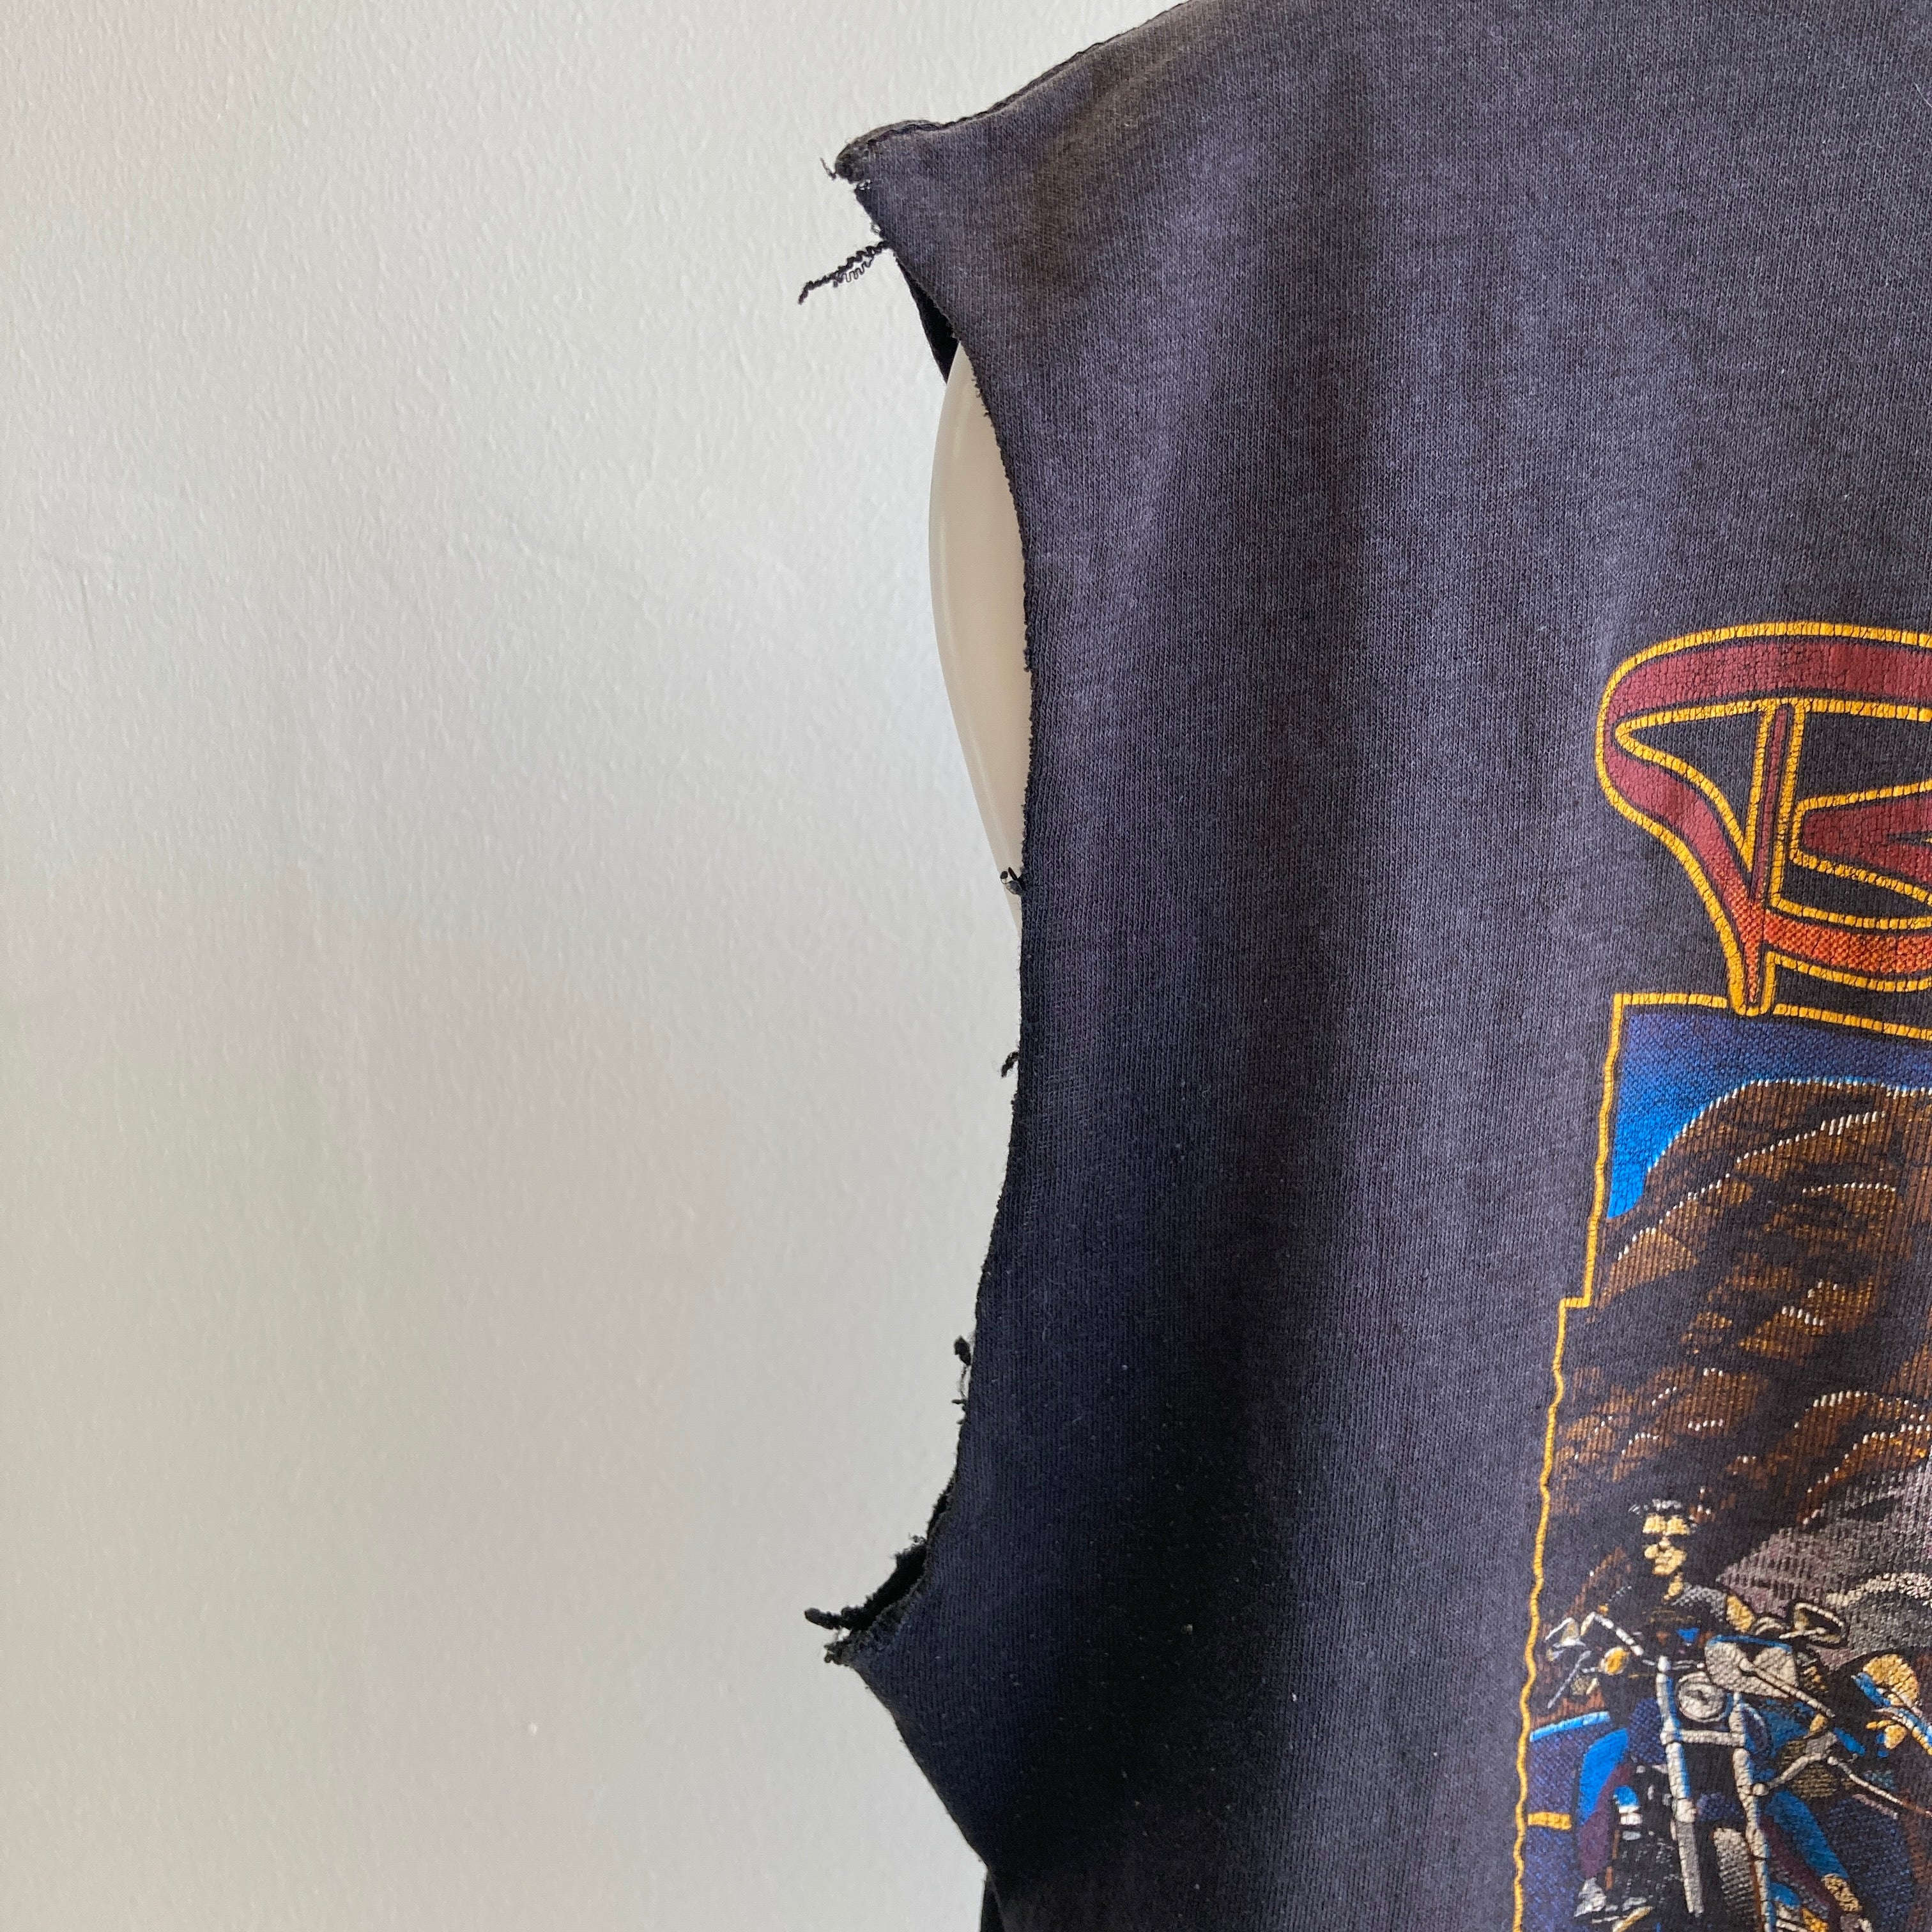 1984 3D Emblem Harley Sturgis Beat Up Cut Off Muscle Tee - Rad Backside!